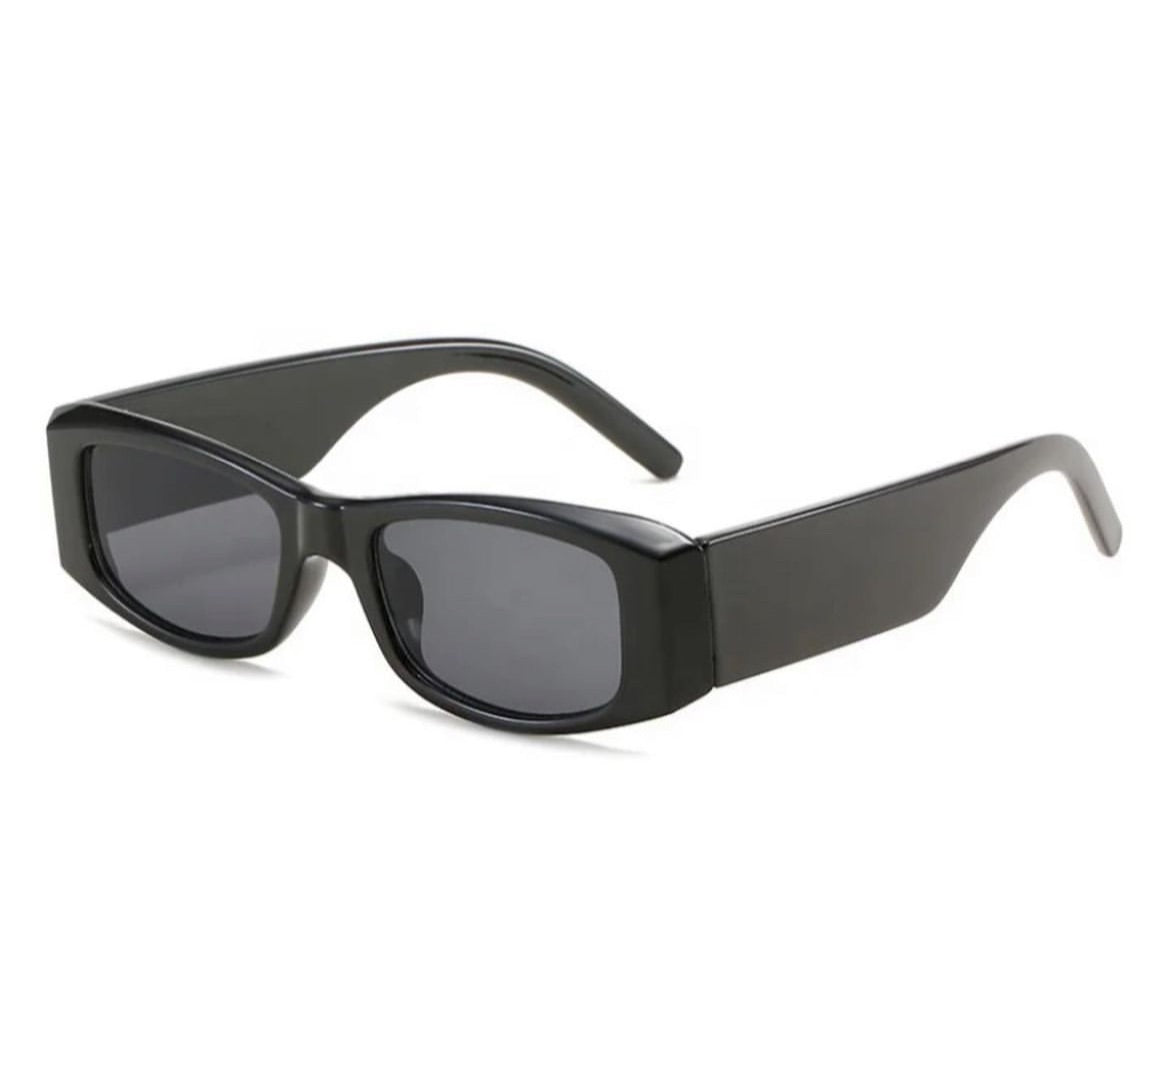 Vintage retro rectangle sunglasses in black